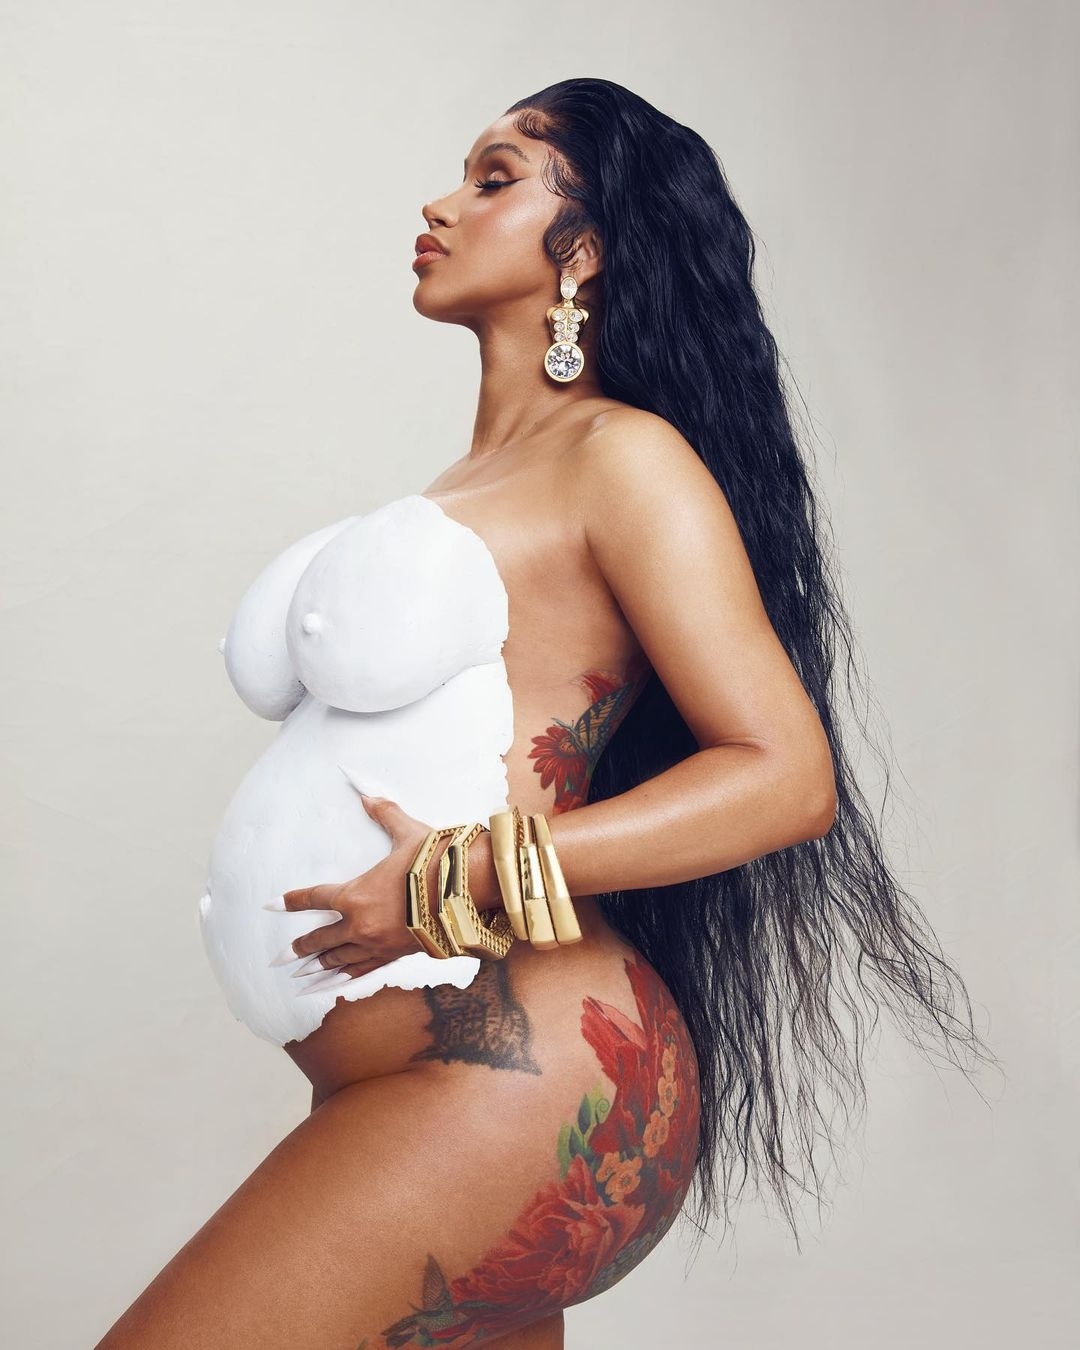 Sex Vijay Tamil Photo - Award-winning singer announces pregnancy in stunning topless photoshoot -  Tamil News - IndiaGlitz.com